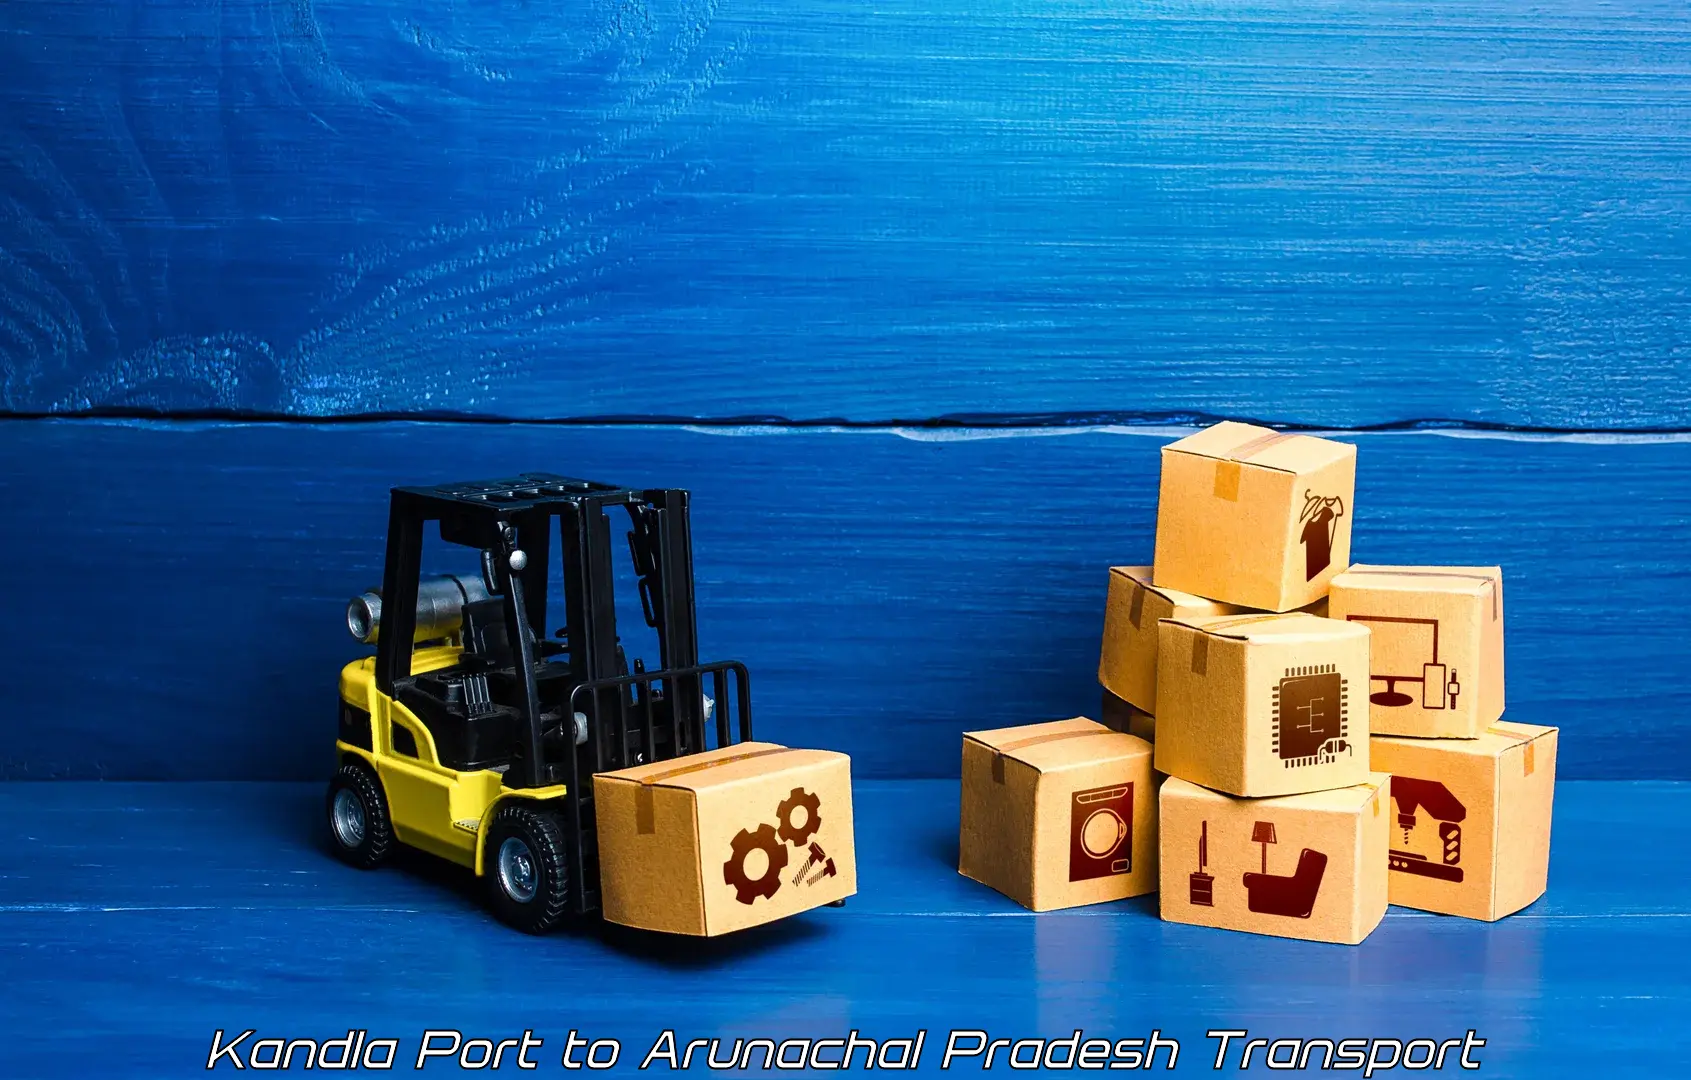 Domestic goods transportation services Kandla Port to Arunachal Pradesh